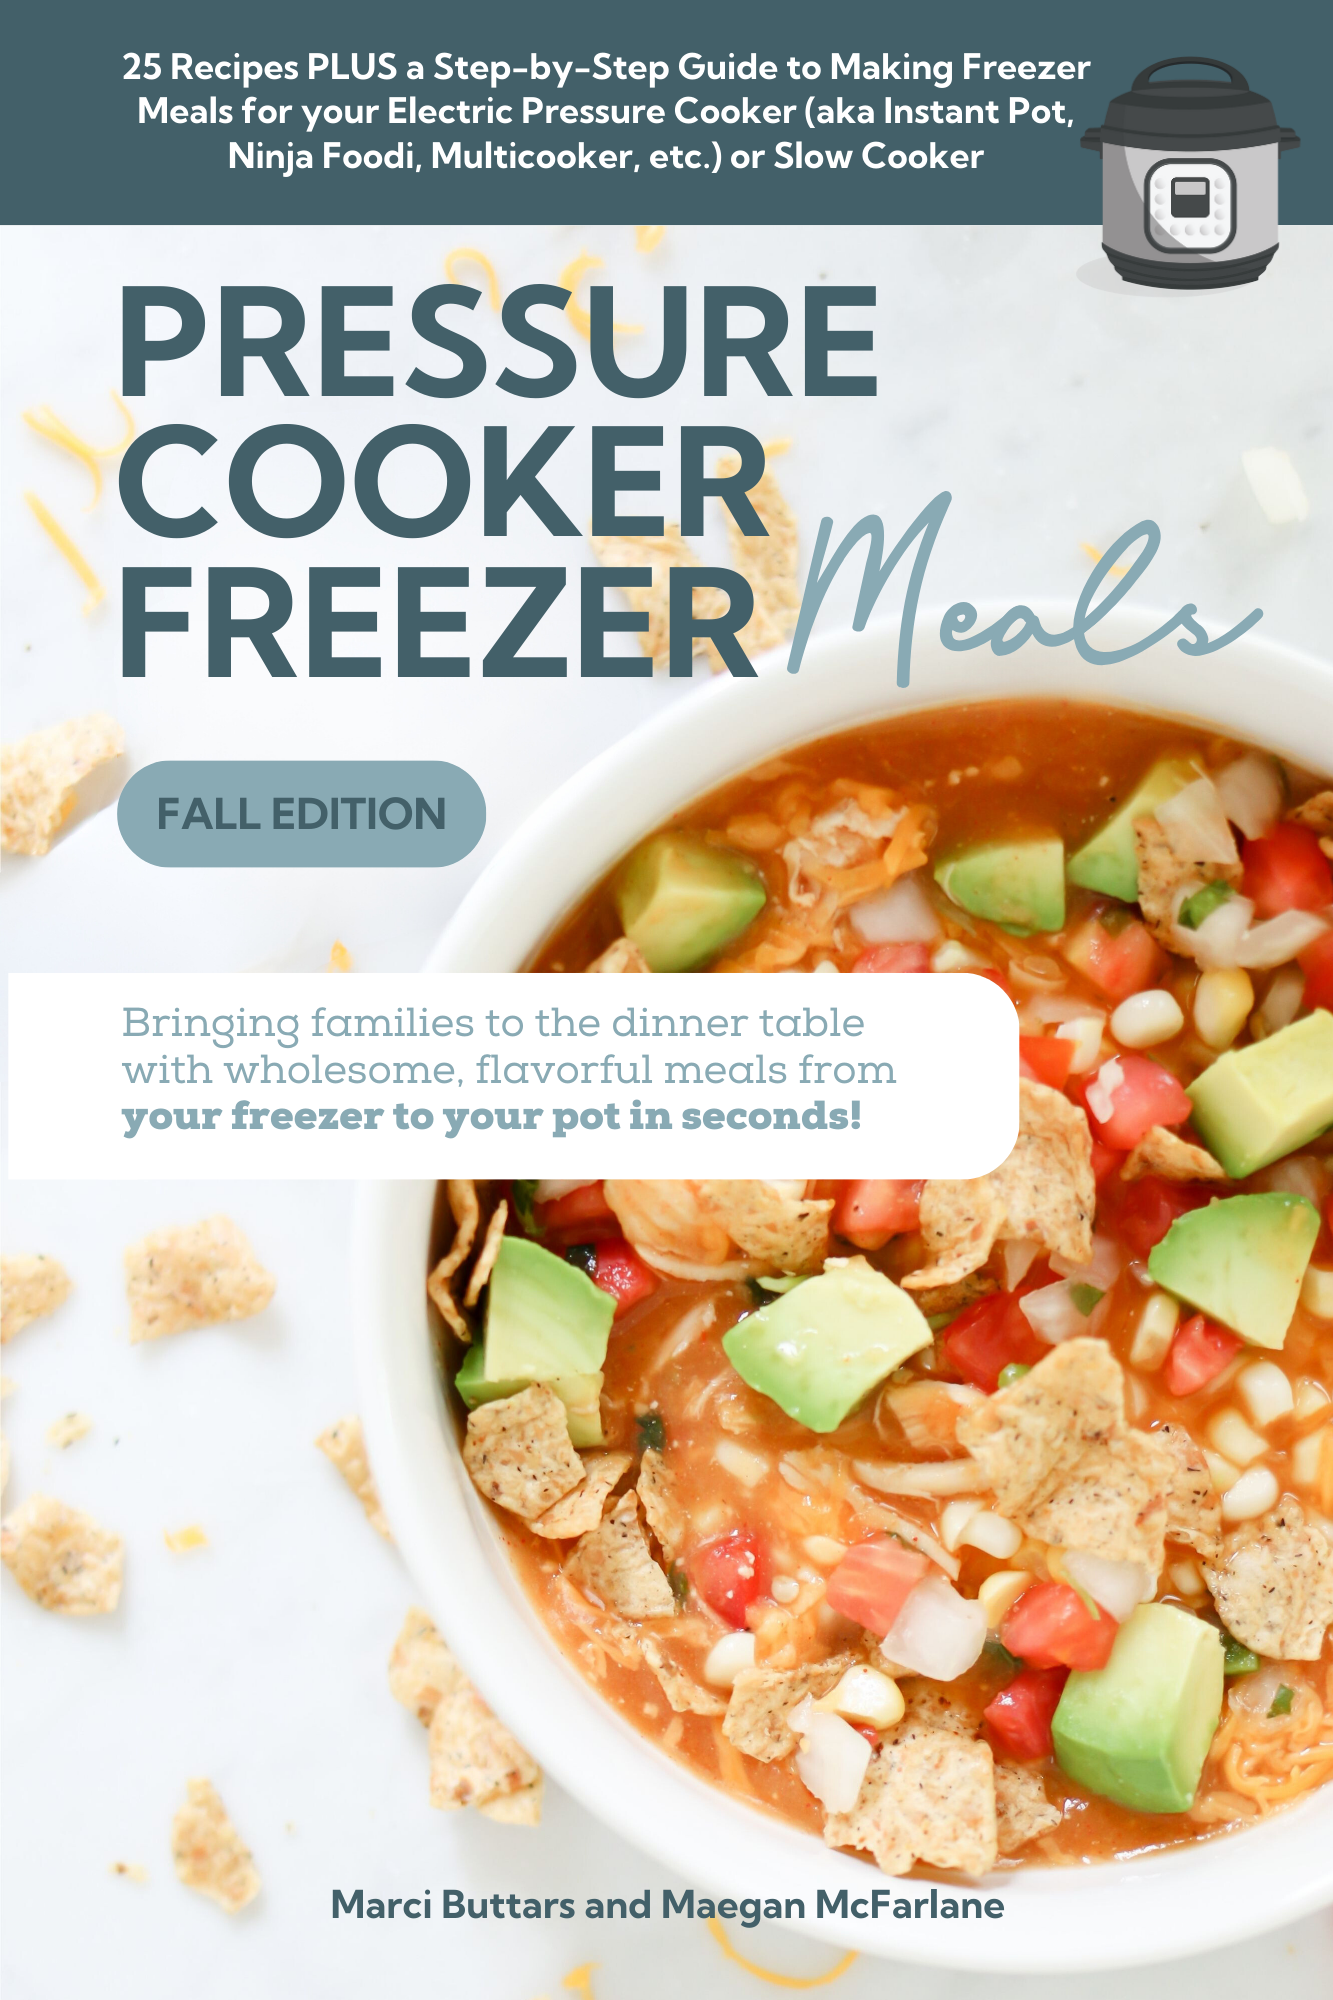 Ninja Foodi Pressure Cooker Meal Prep Cookbook